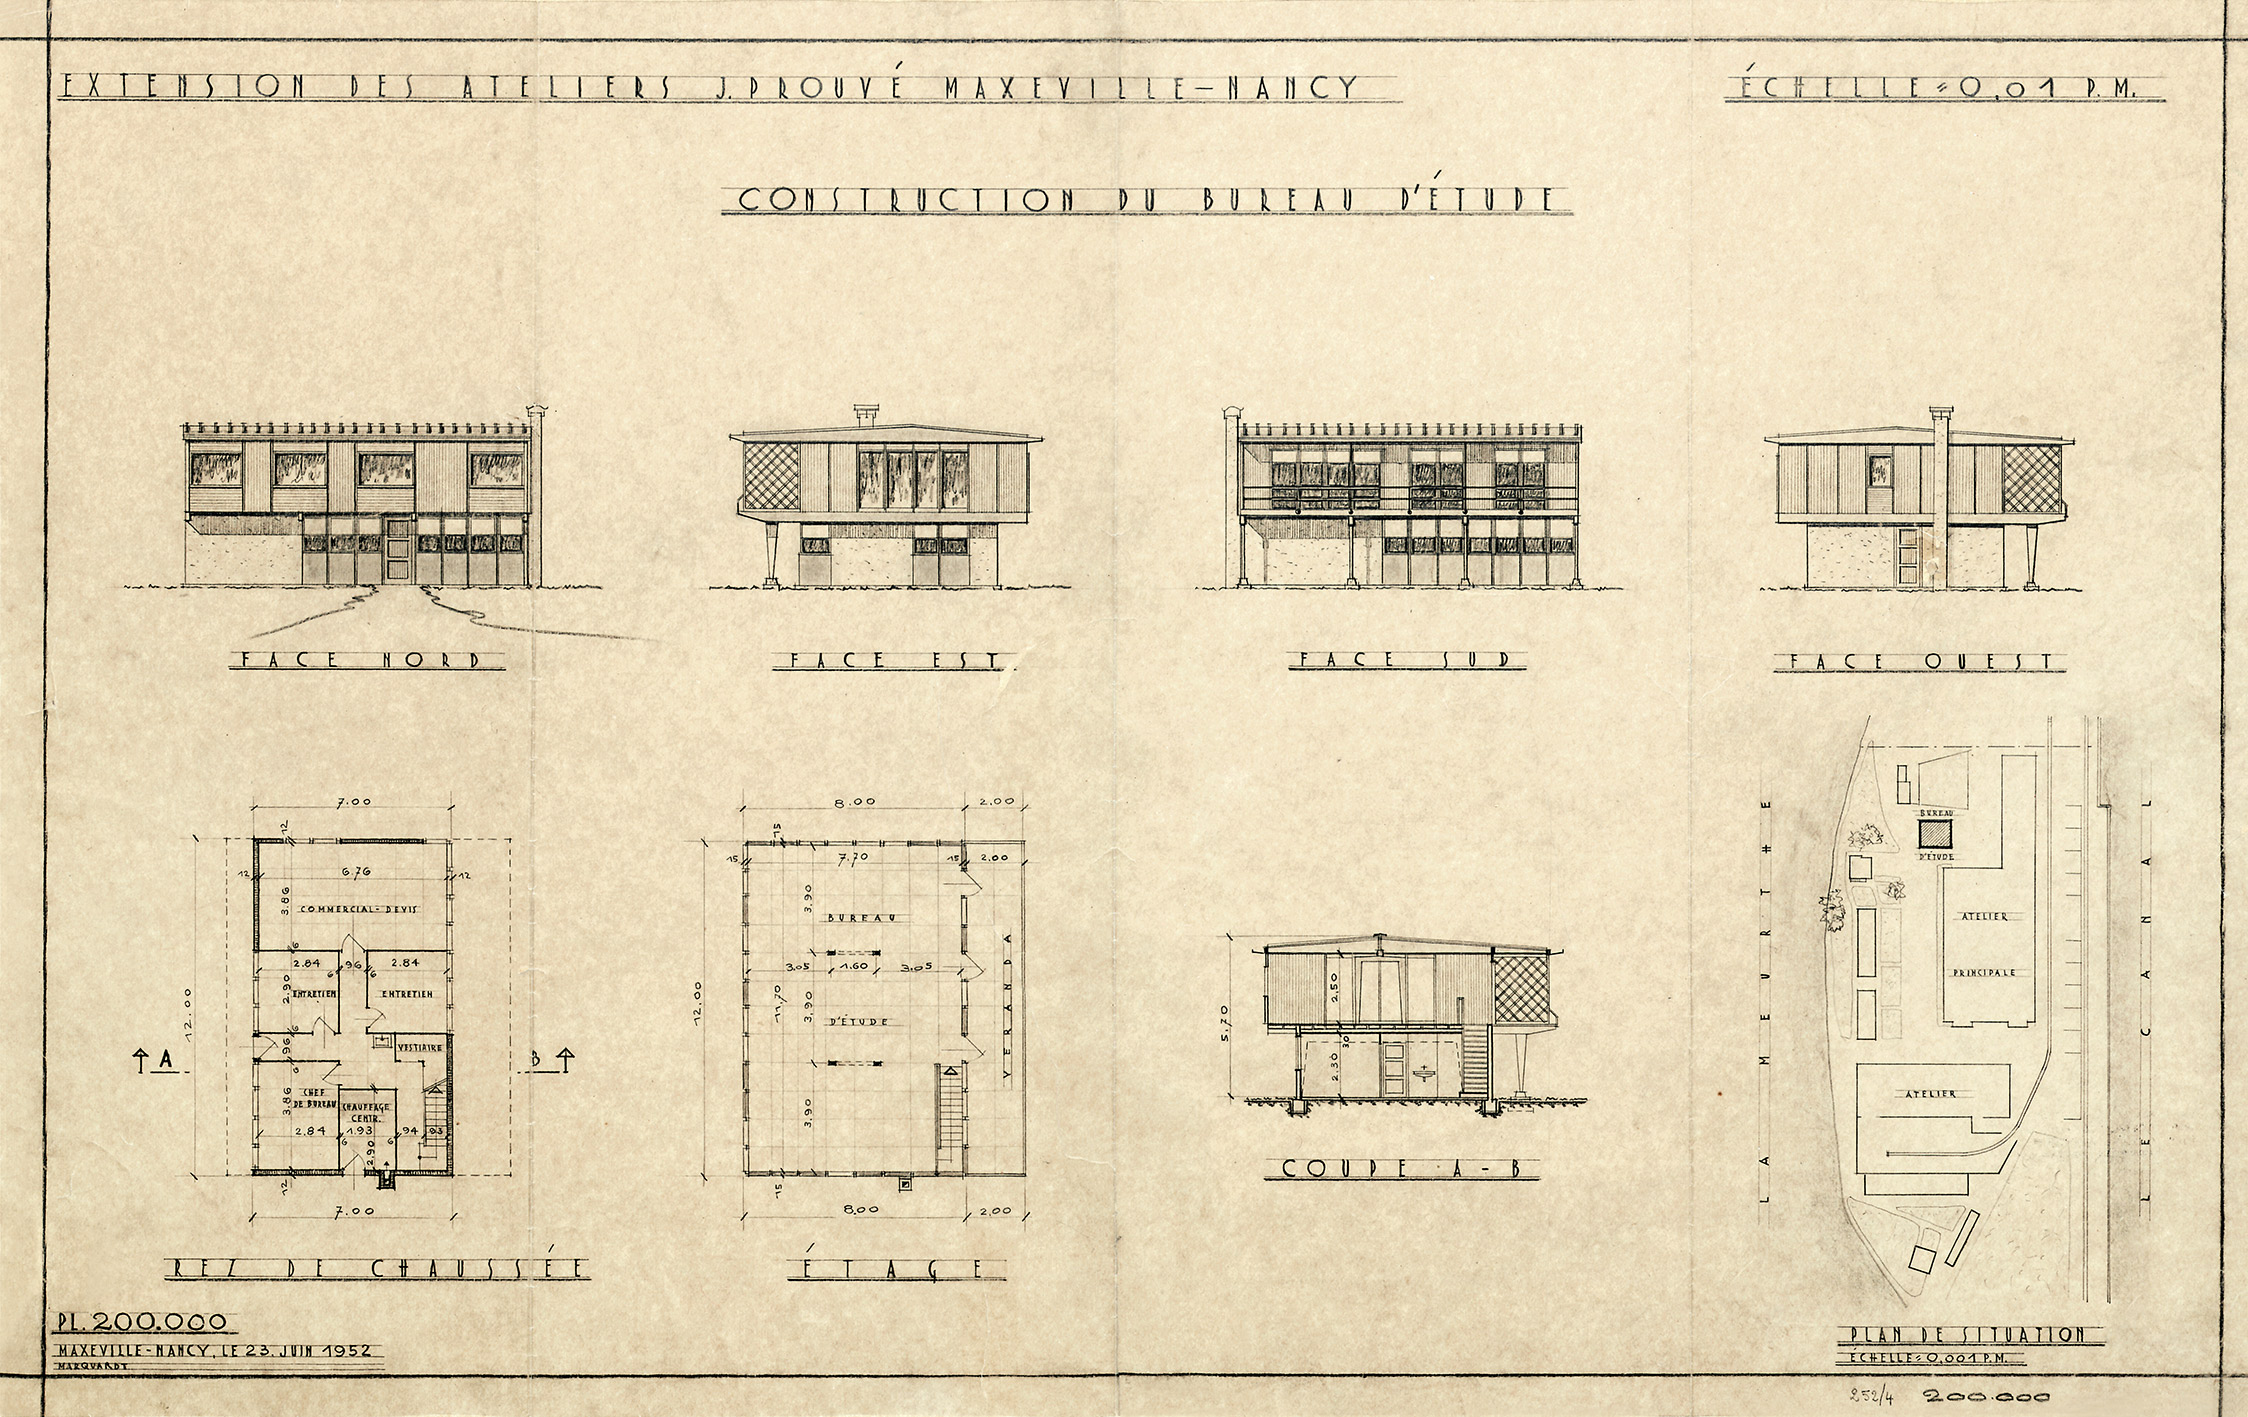 Ateliers Jean Prouvé. “Extension of Ateliers J. Prouvé, Maxéville-Nancy. Construction of the design office”. Drawing no. 200.000, 23 June 1952, by F. Marquardt.